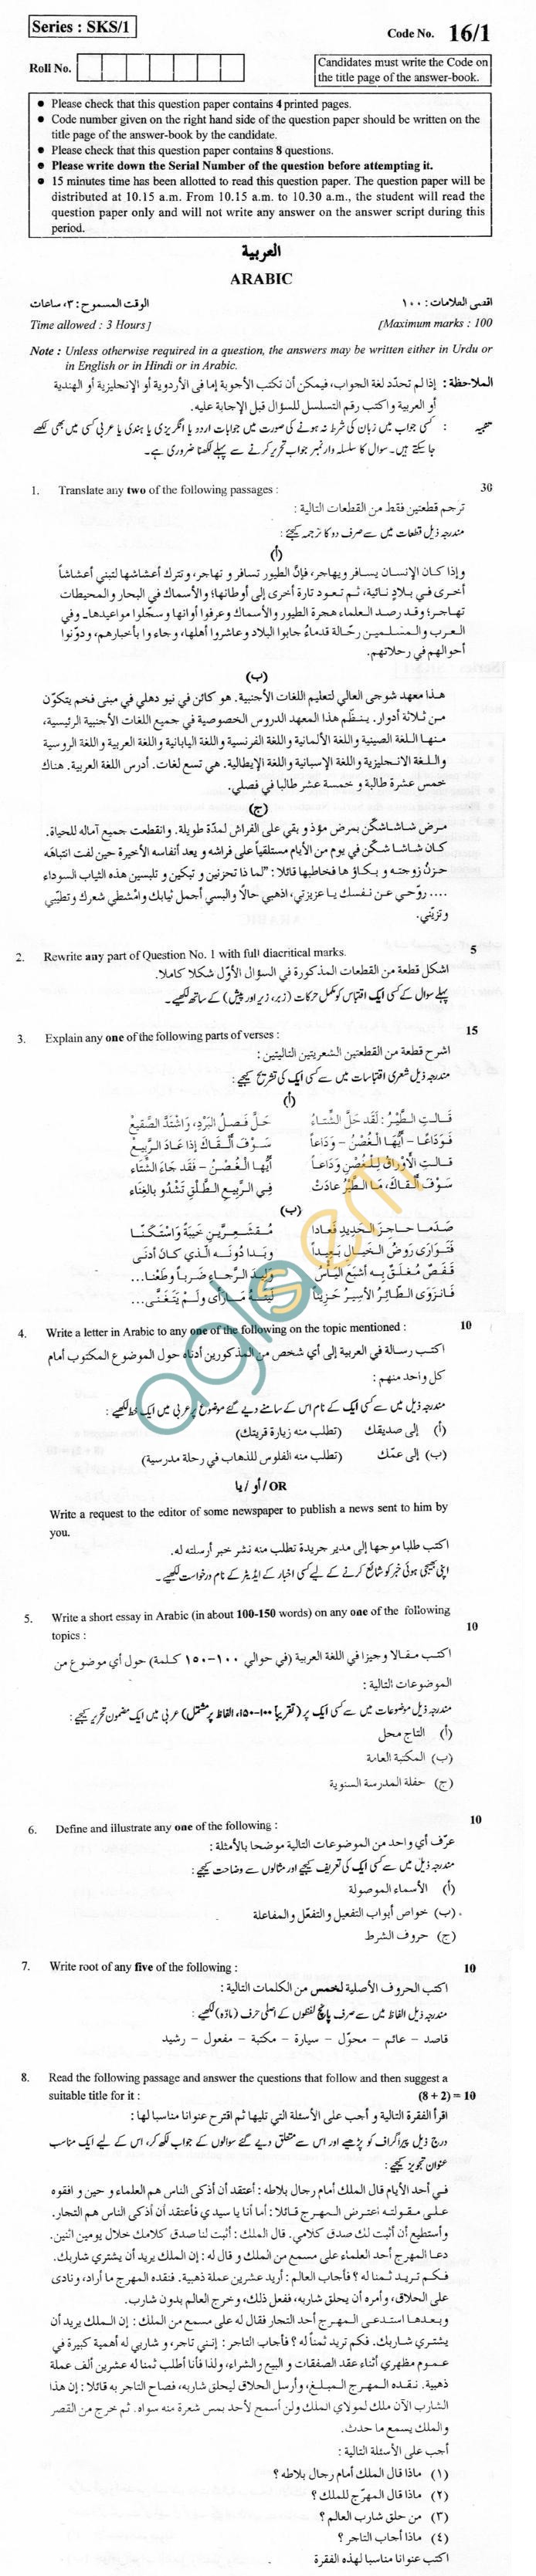 CBSE Board Exam 2013 Class XII Question Paper - Arabic